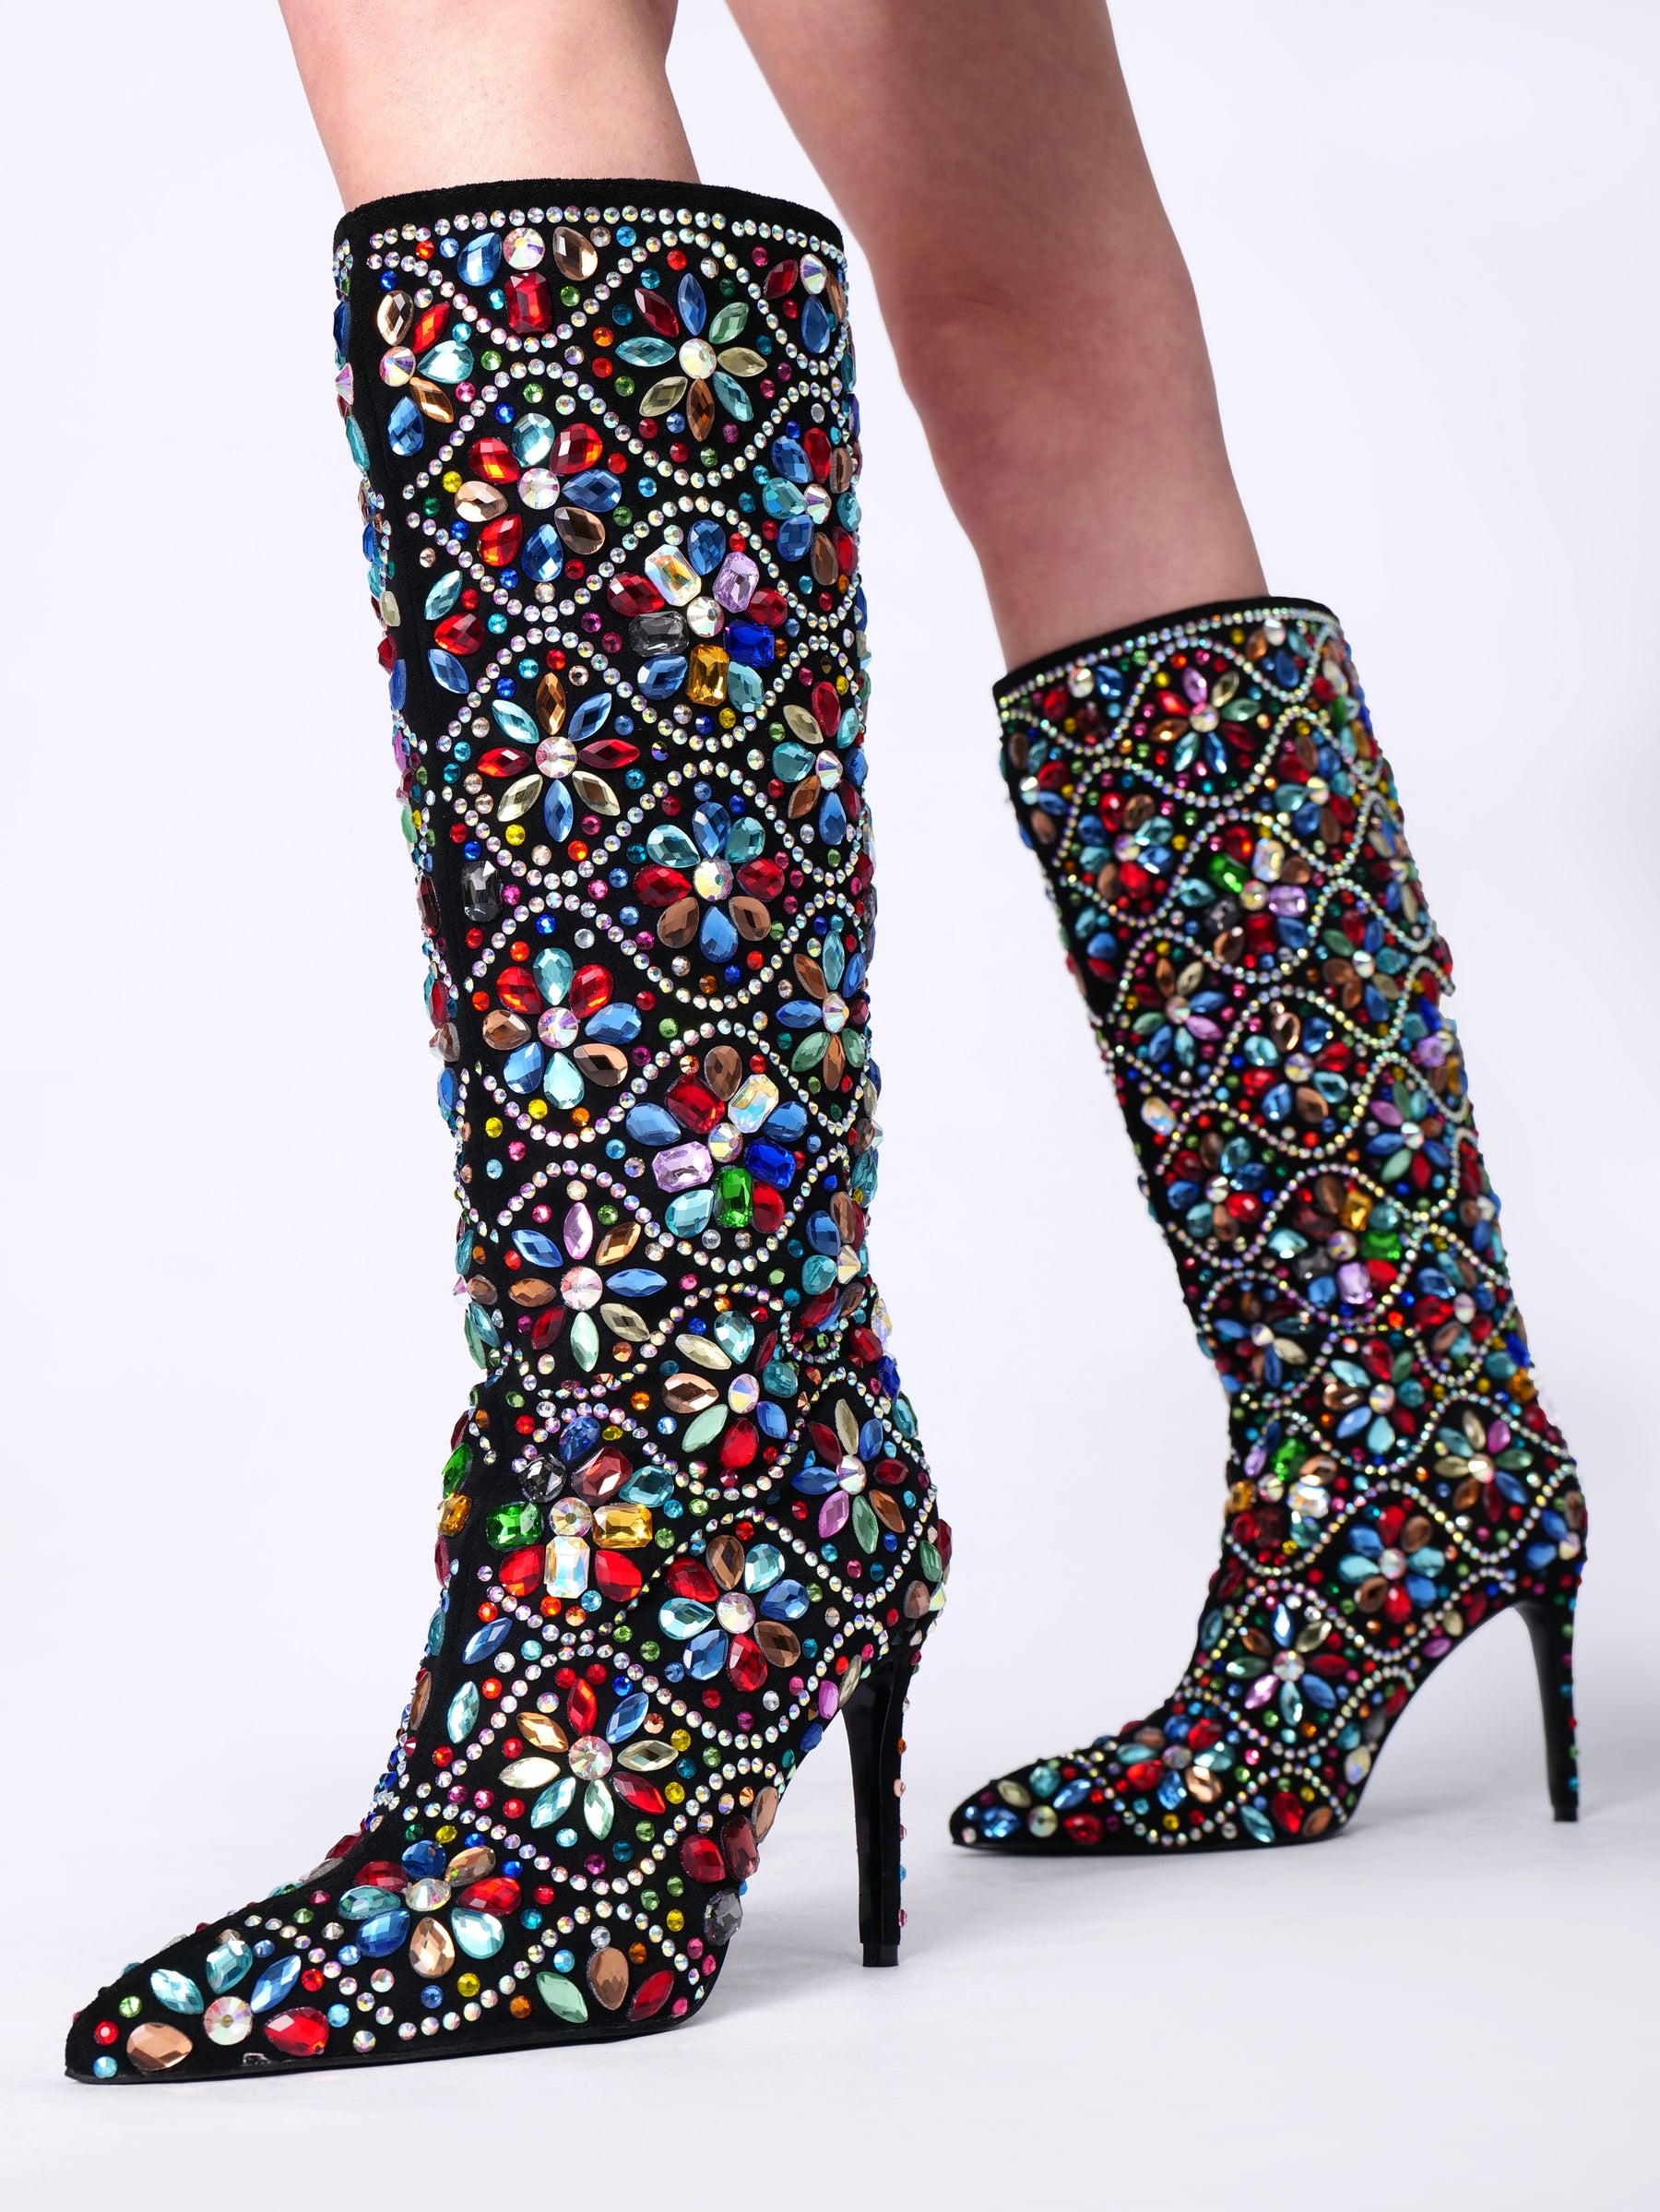 Colorful Rhinestone Knee High Boots